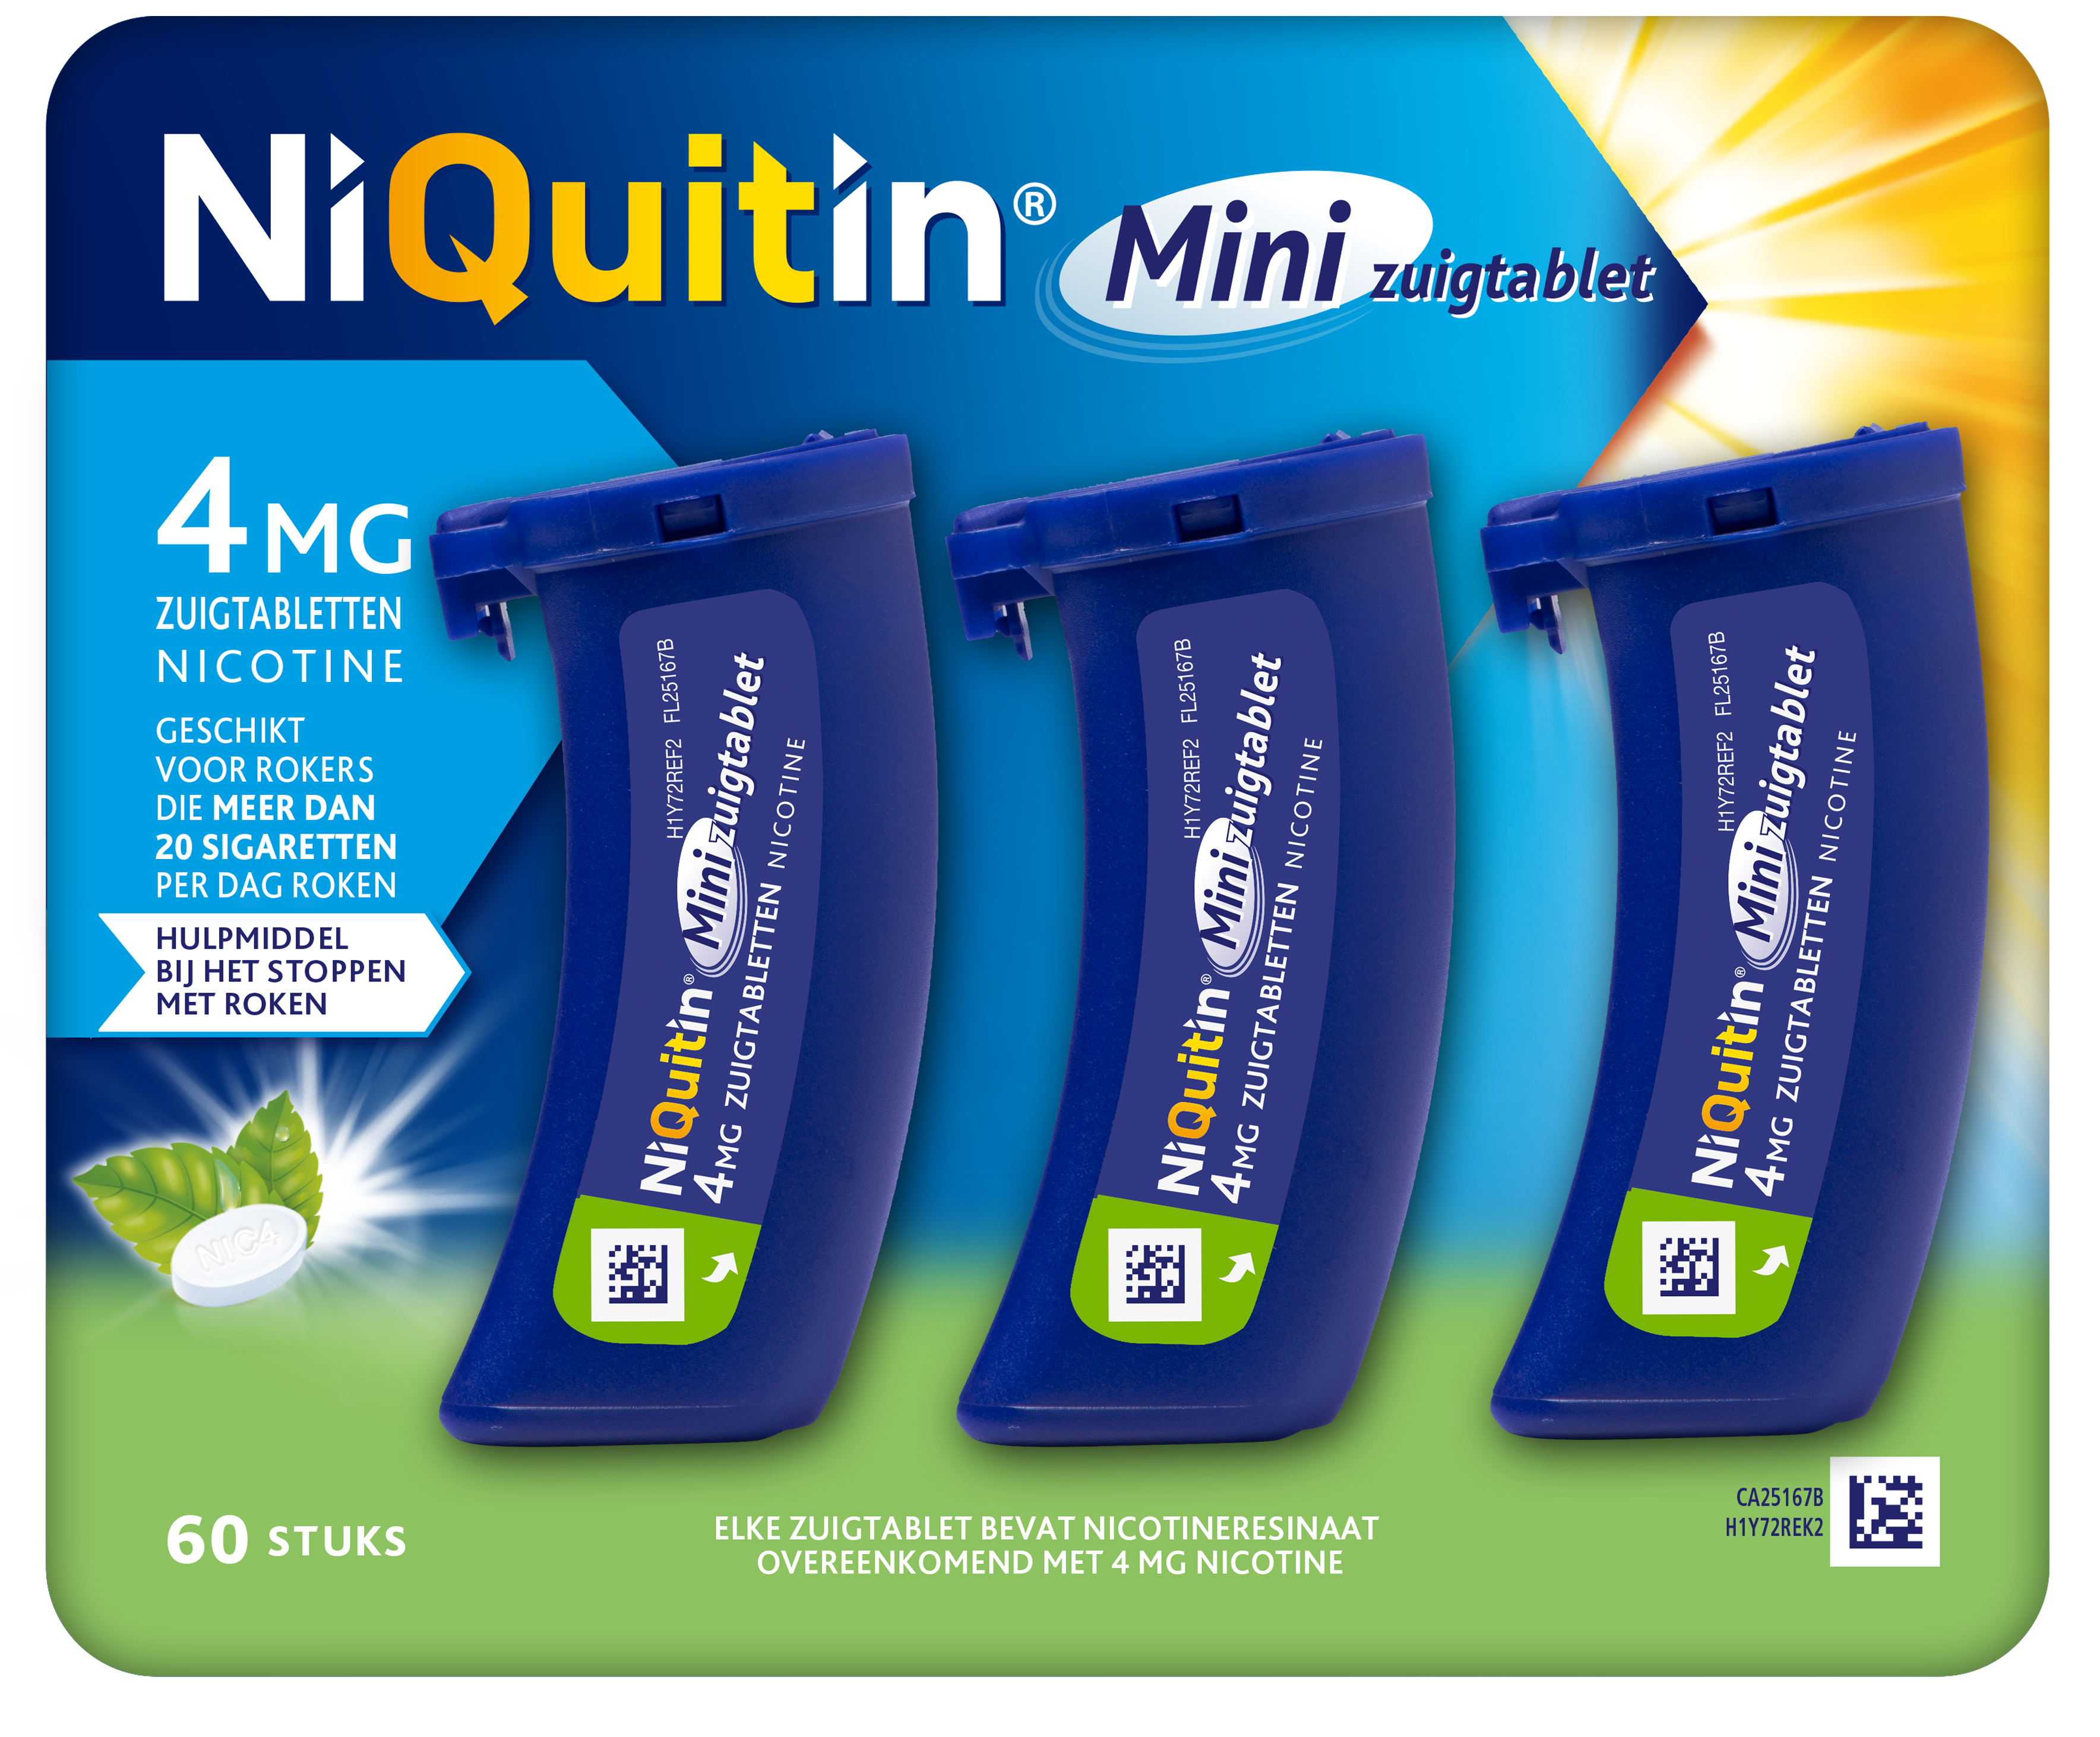 NiQuitin Minizuigtablet / 4 mg